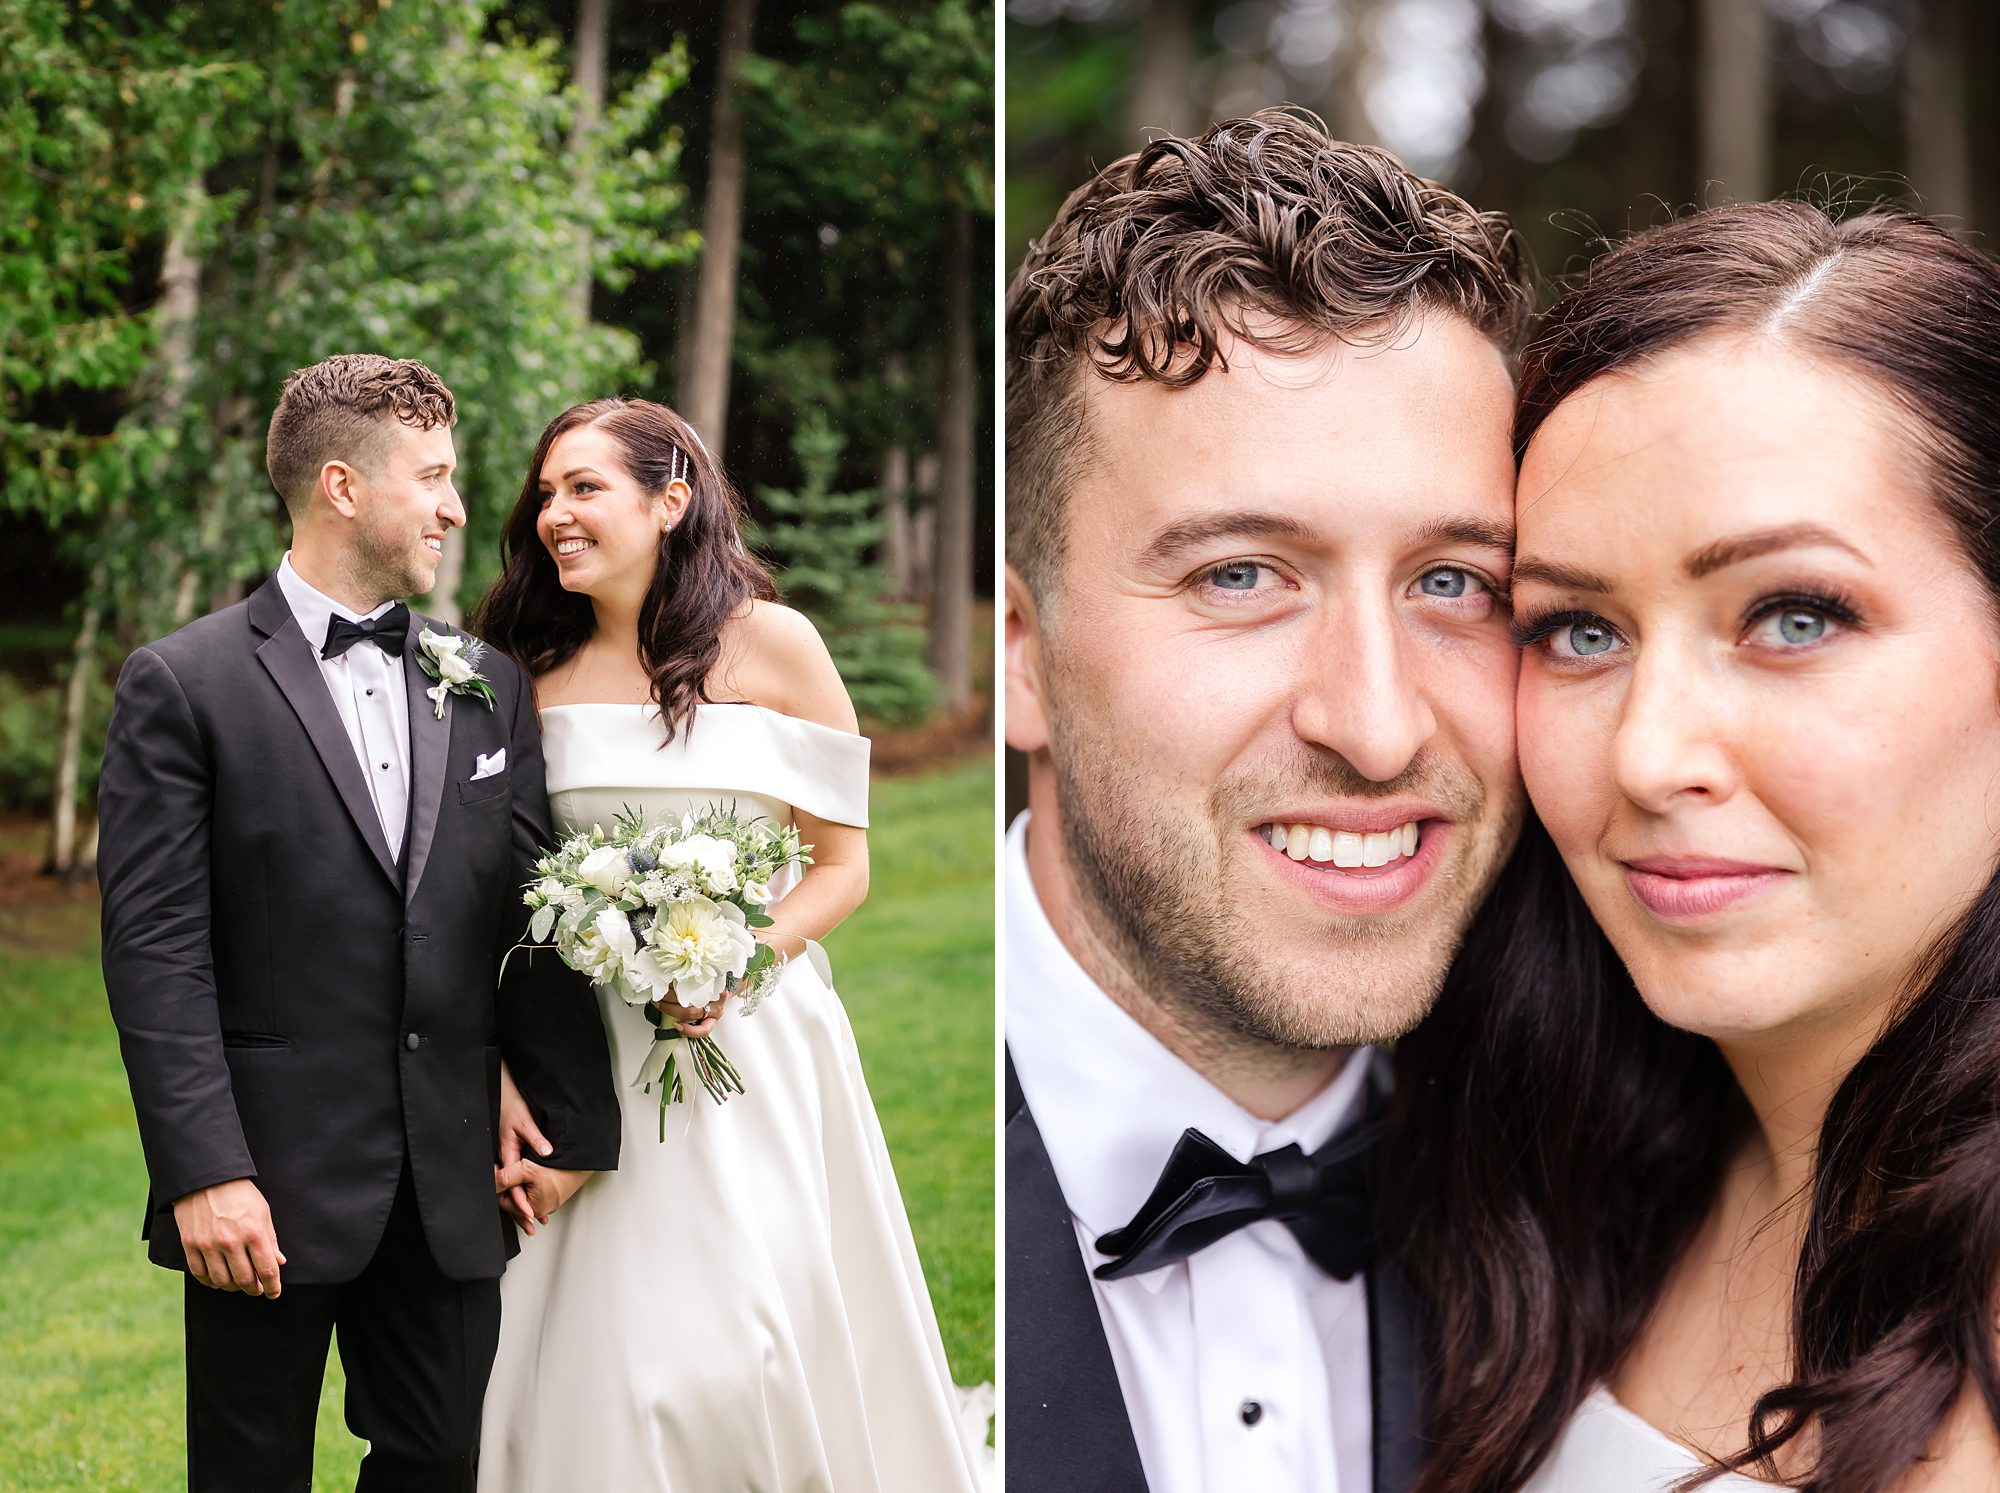 outdoor summer wedding in Cornwall, ON - bride and groom portraits